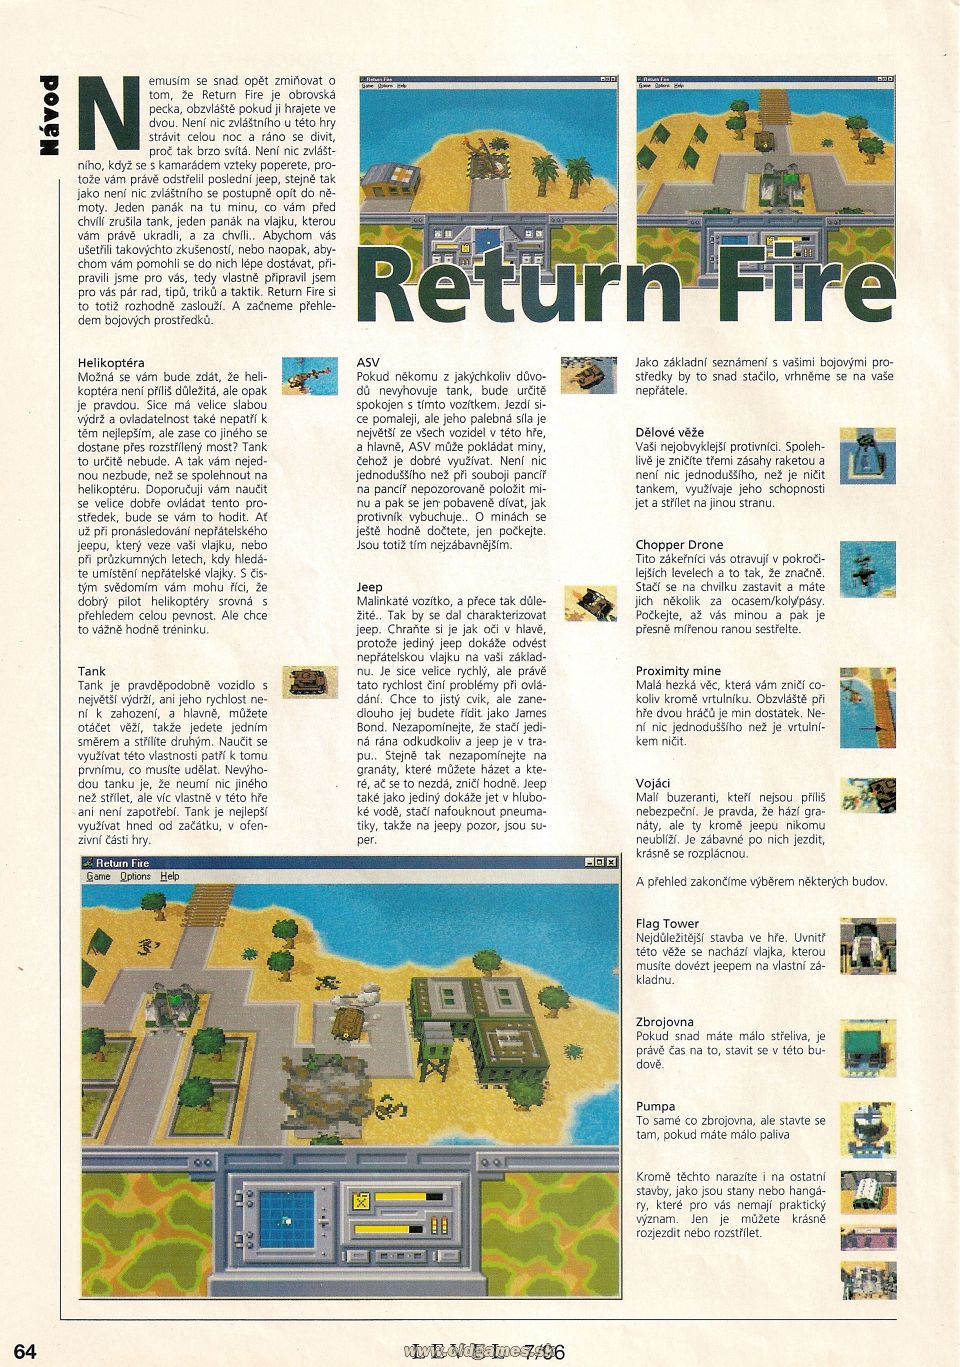 Return Fire - Návod